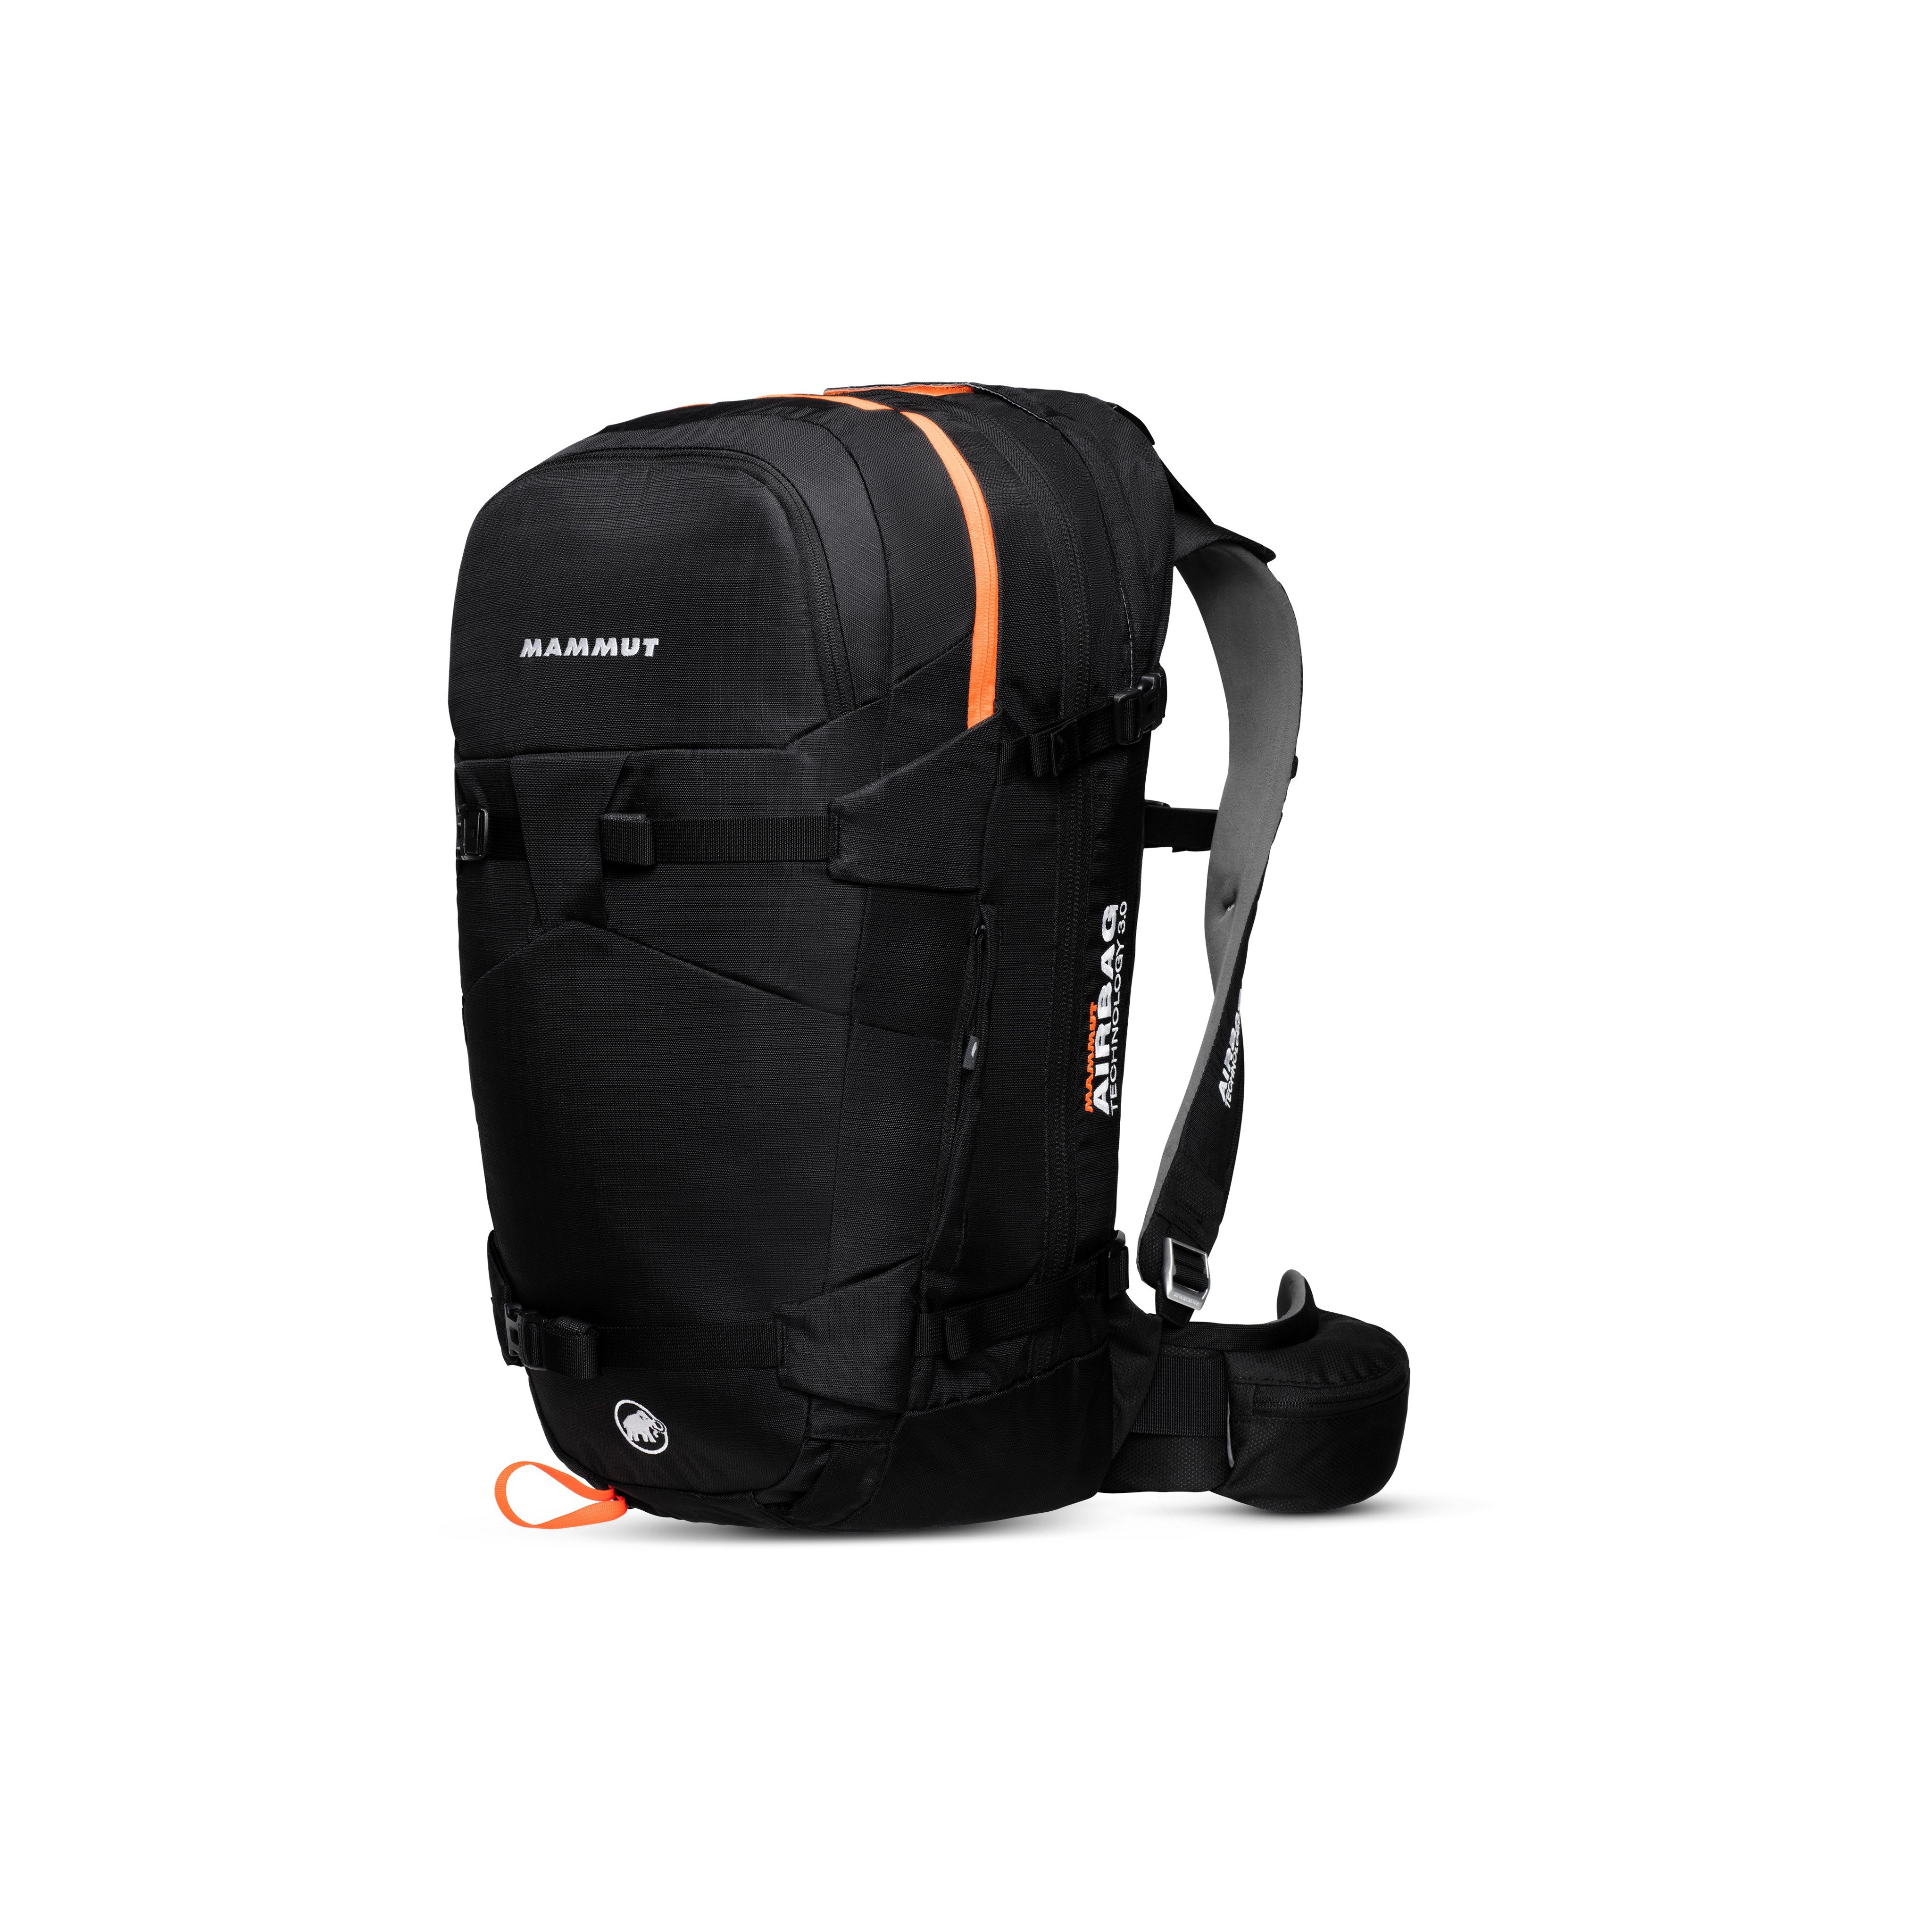 Ride Removable Airbag 3.0 - black-vibrant orange, 30 L product image